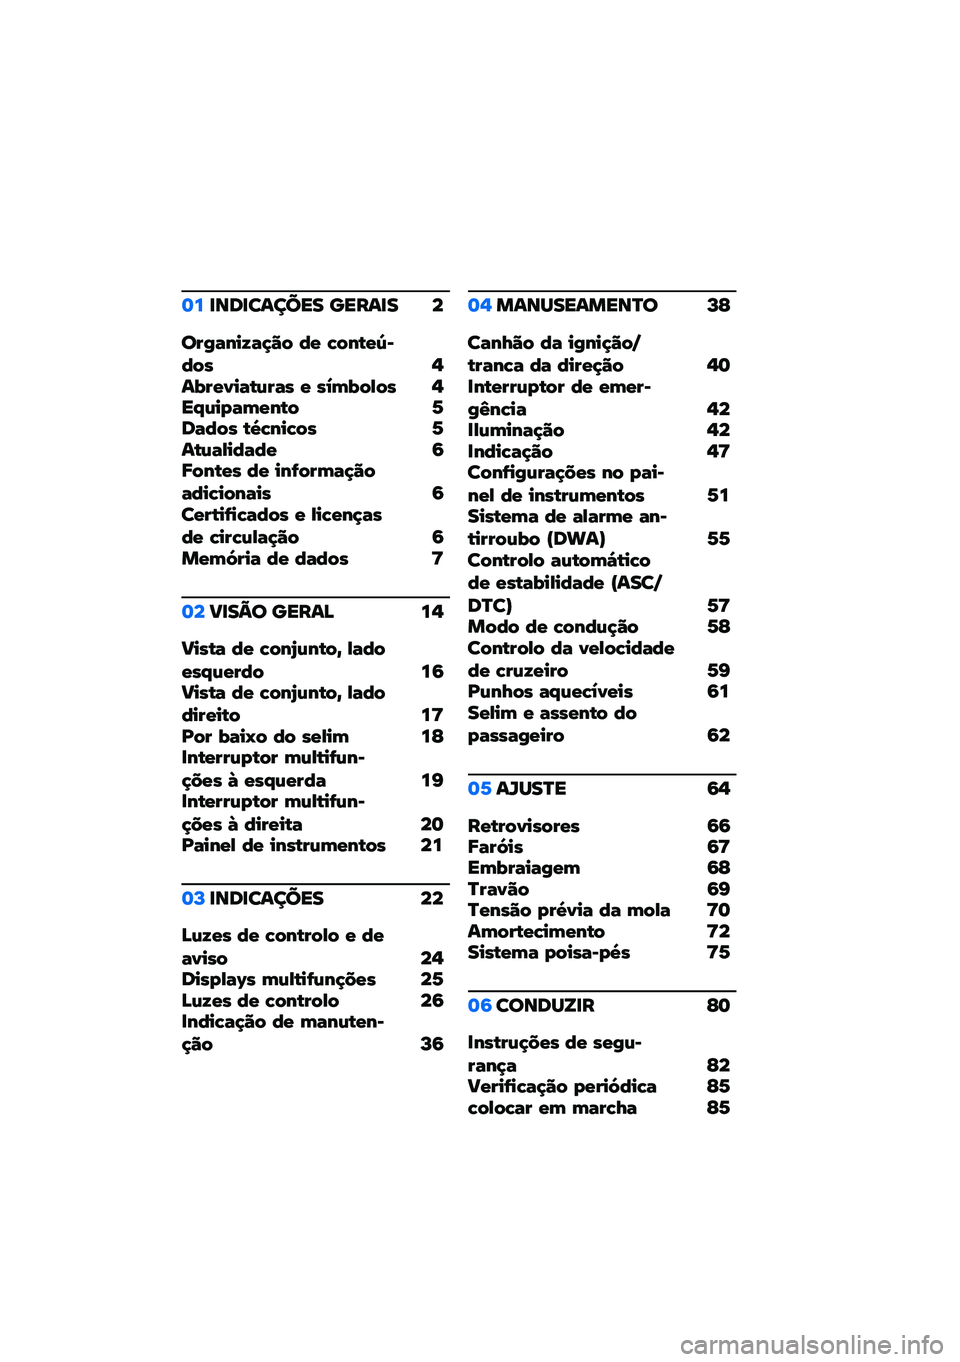 BMW MOTORRAD R NINE T 2021  Manual do condutor (in Portuguese) �	��
���
������ �����
� �
��������� �!�" �#�$ �%�"��&�$��*�#�"�+ �,��.��$�/���&�(���+ �$ �+�0�2�.�"�3�"�+ �,��4�(��5��2�$��&�" �6���#�"�+ �&�8�%���%�"�+ �6��&�(